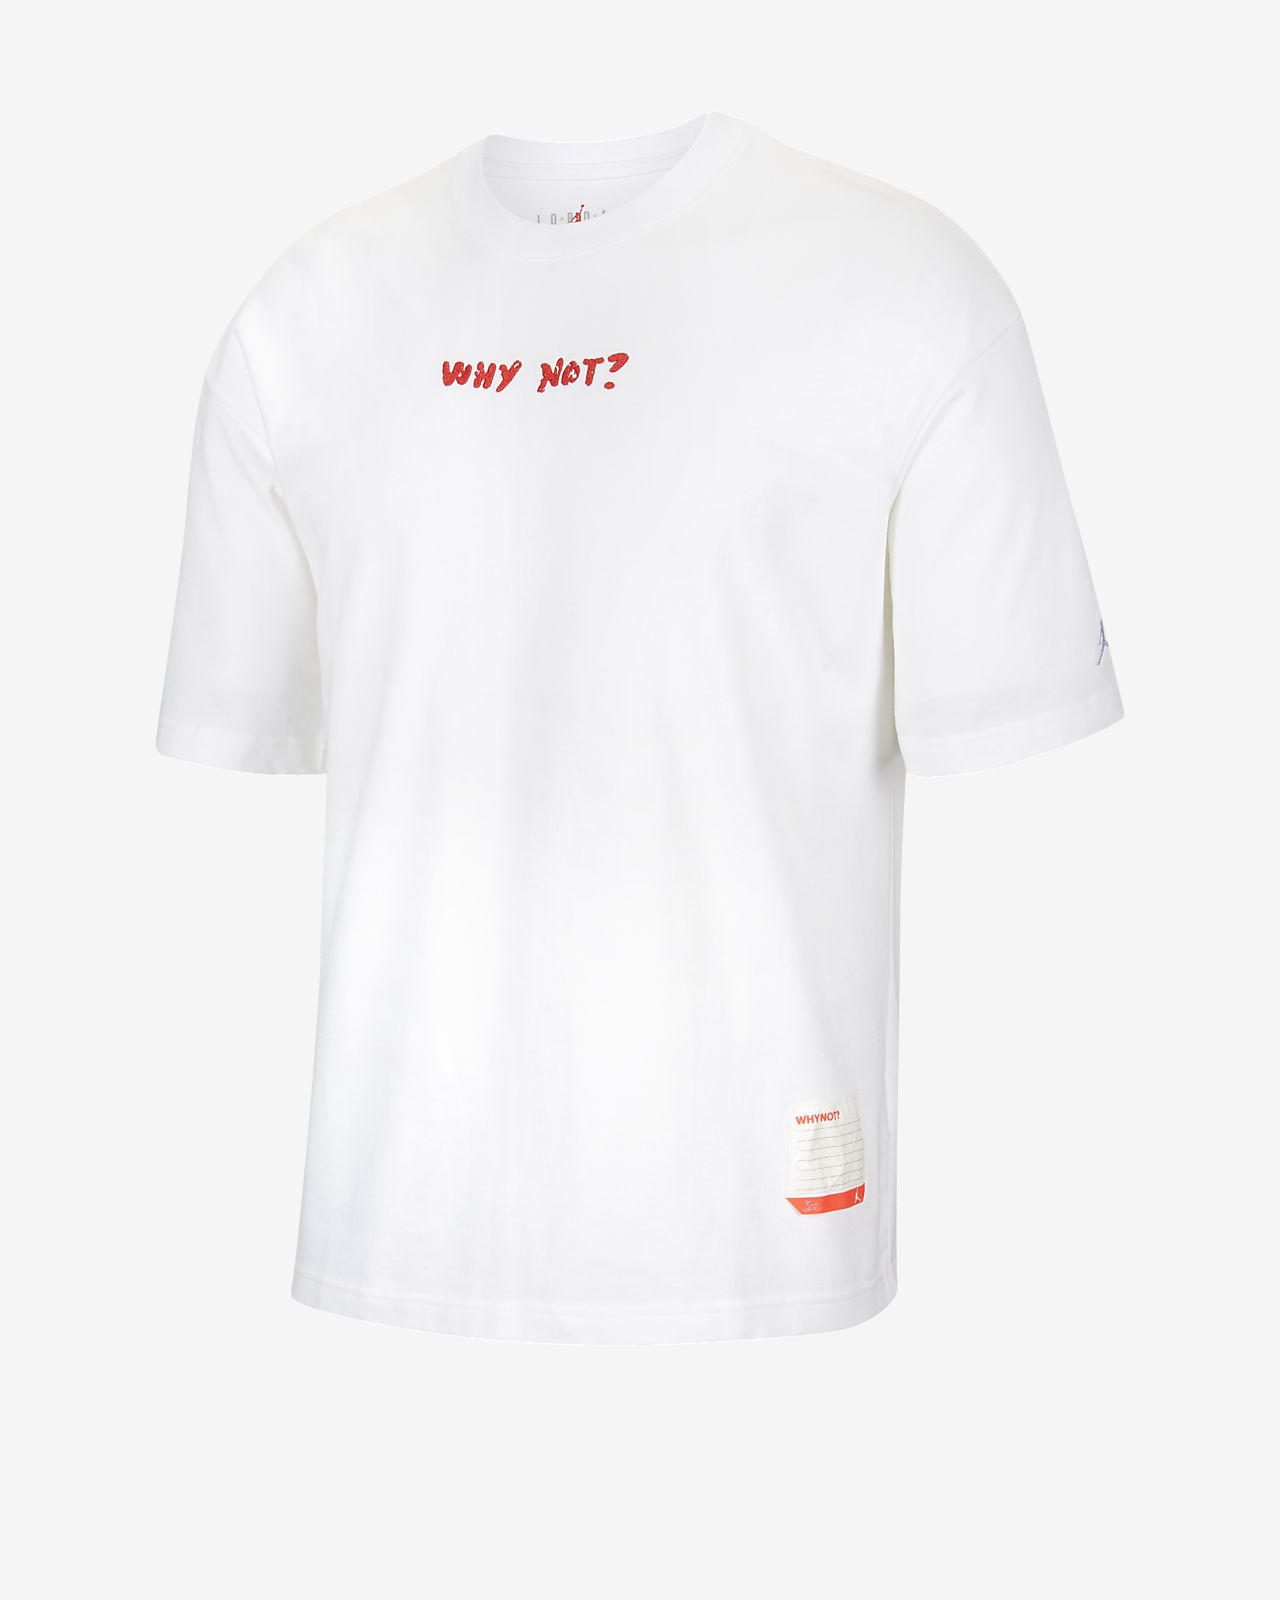 Nikeid T Shirt Off 66 Bonyadroudaki Com - roblox nike shirts id coolmine community school